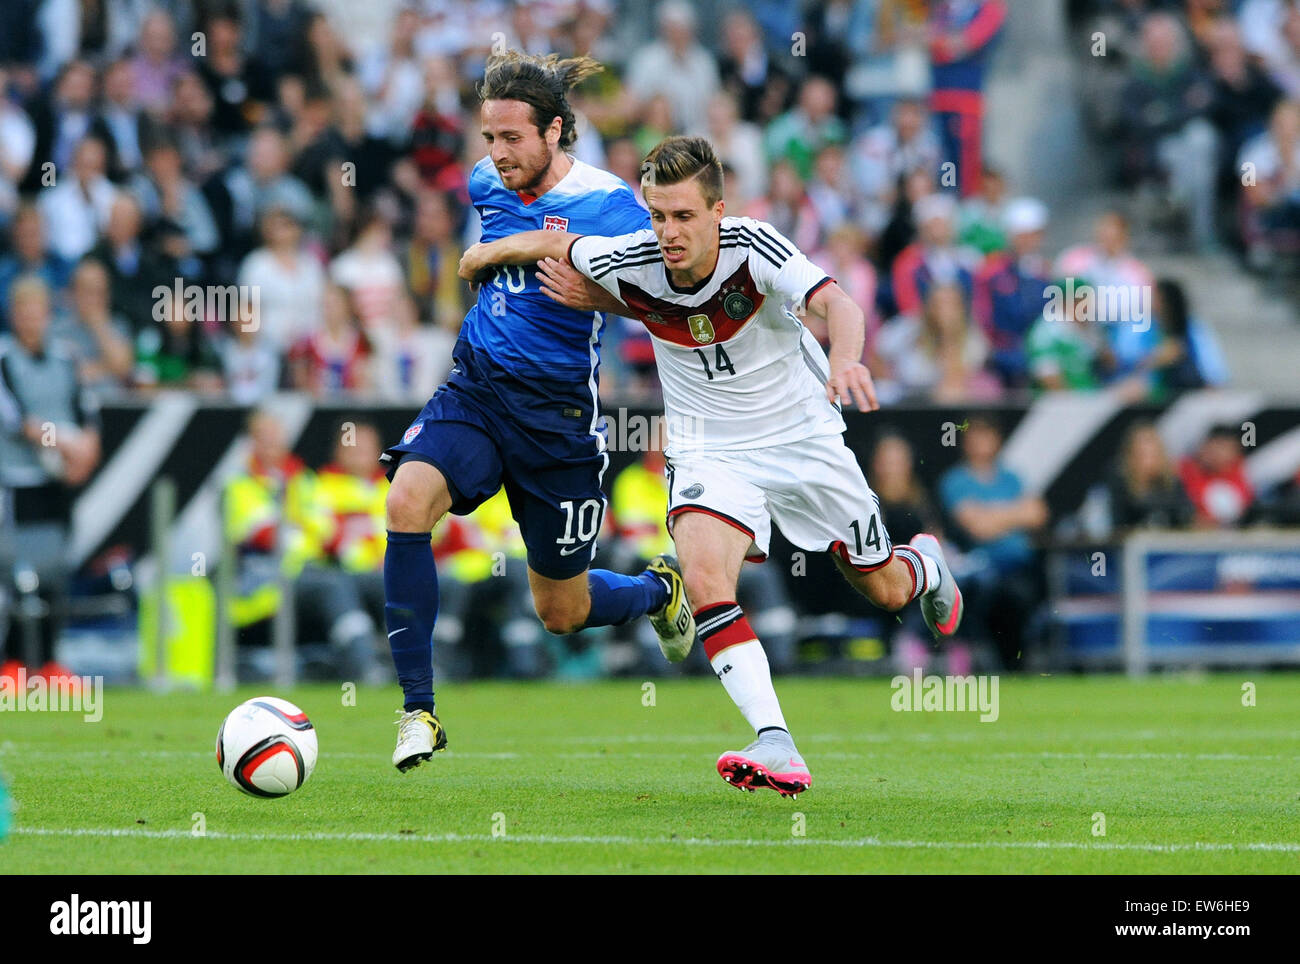 Friendlymatch at Rhein Energie Stadion Cologne: Germany vs USA: Patrick Herrmann (GER), Mix Diskerud (USA) Stock Photo